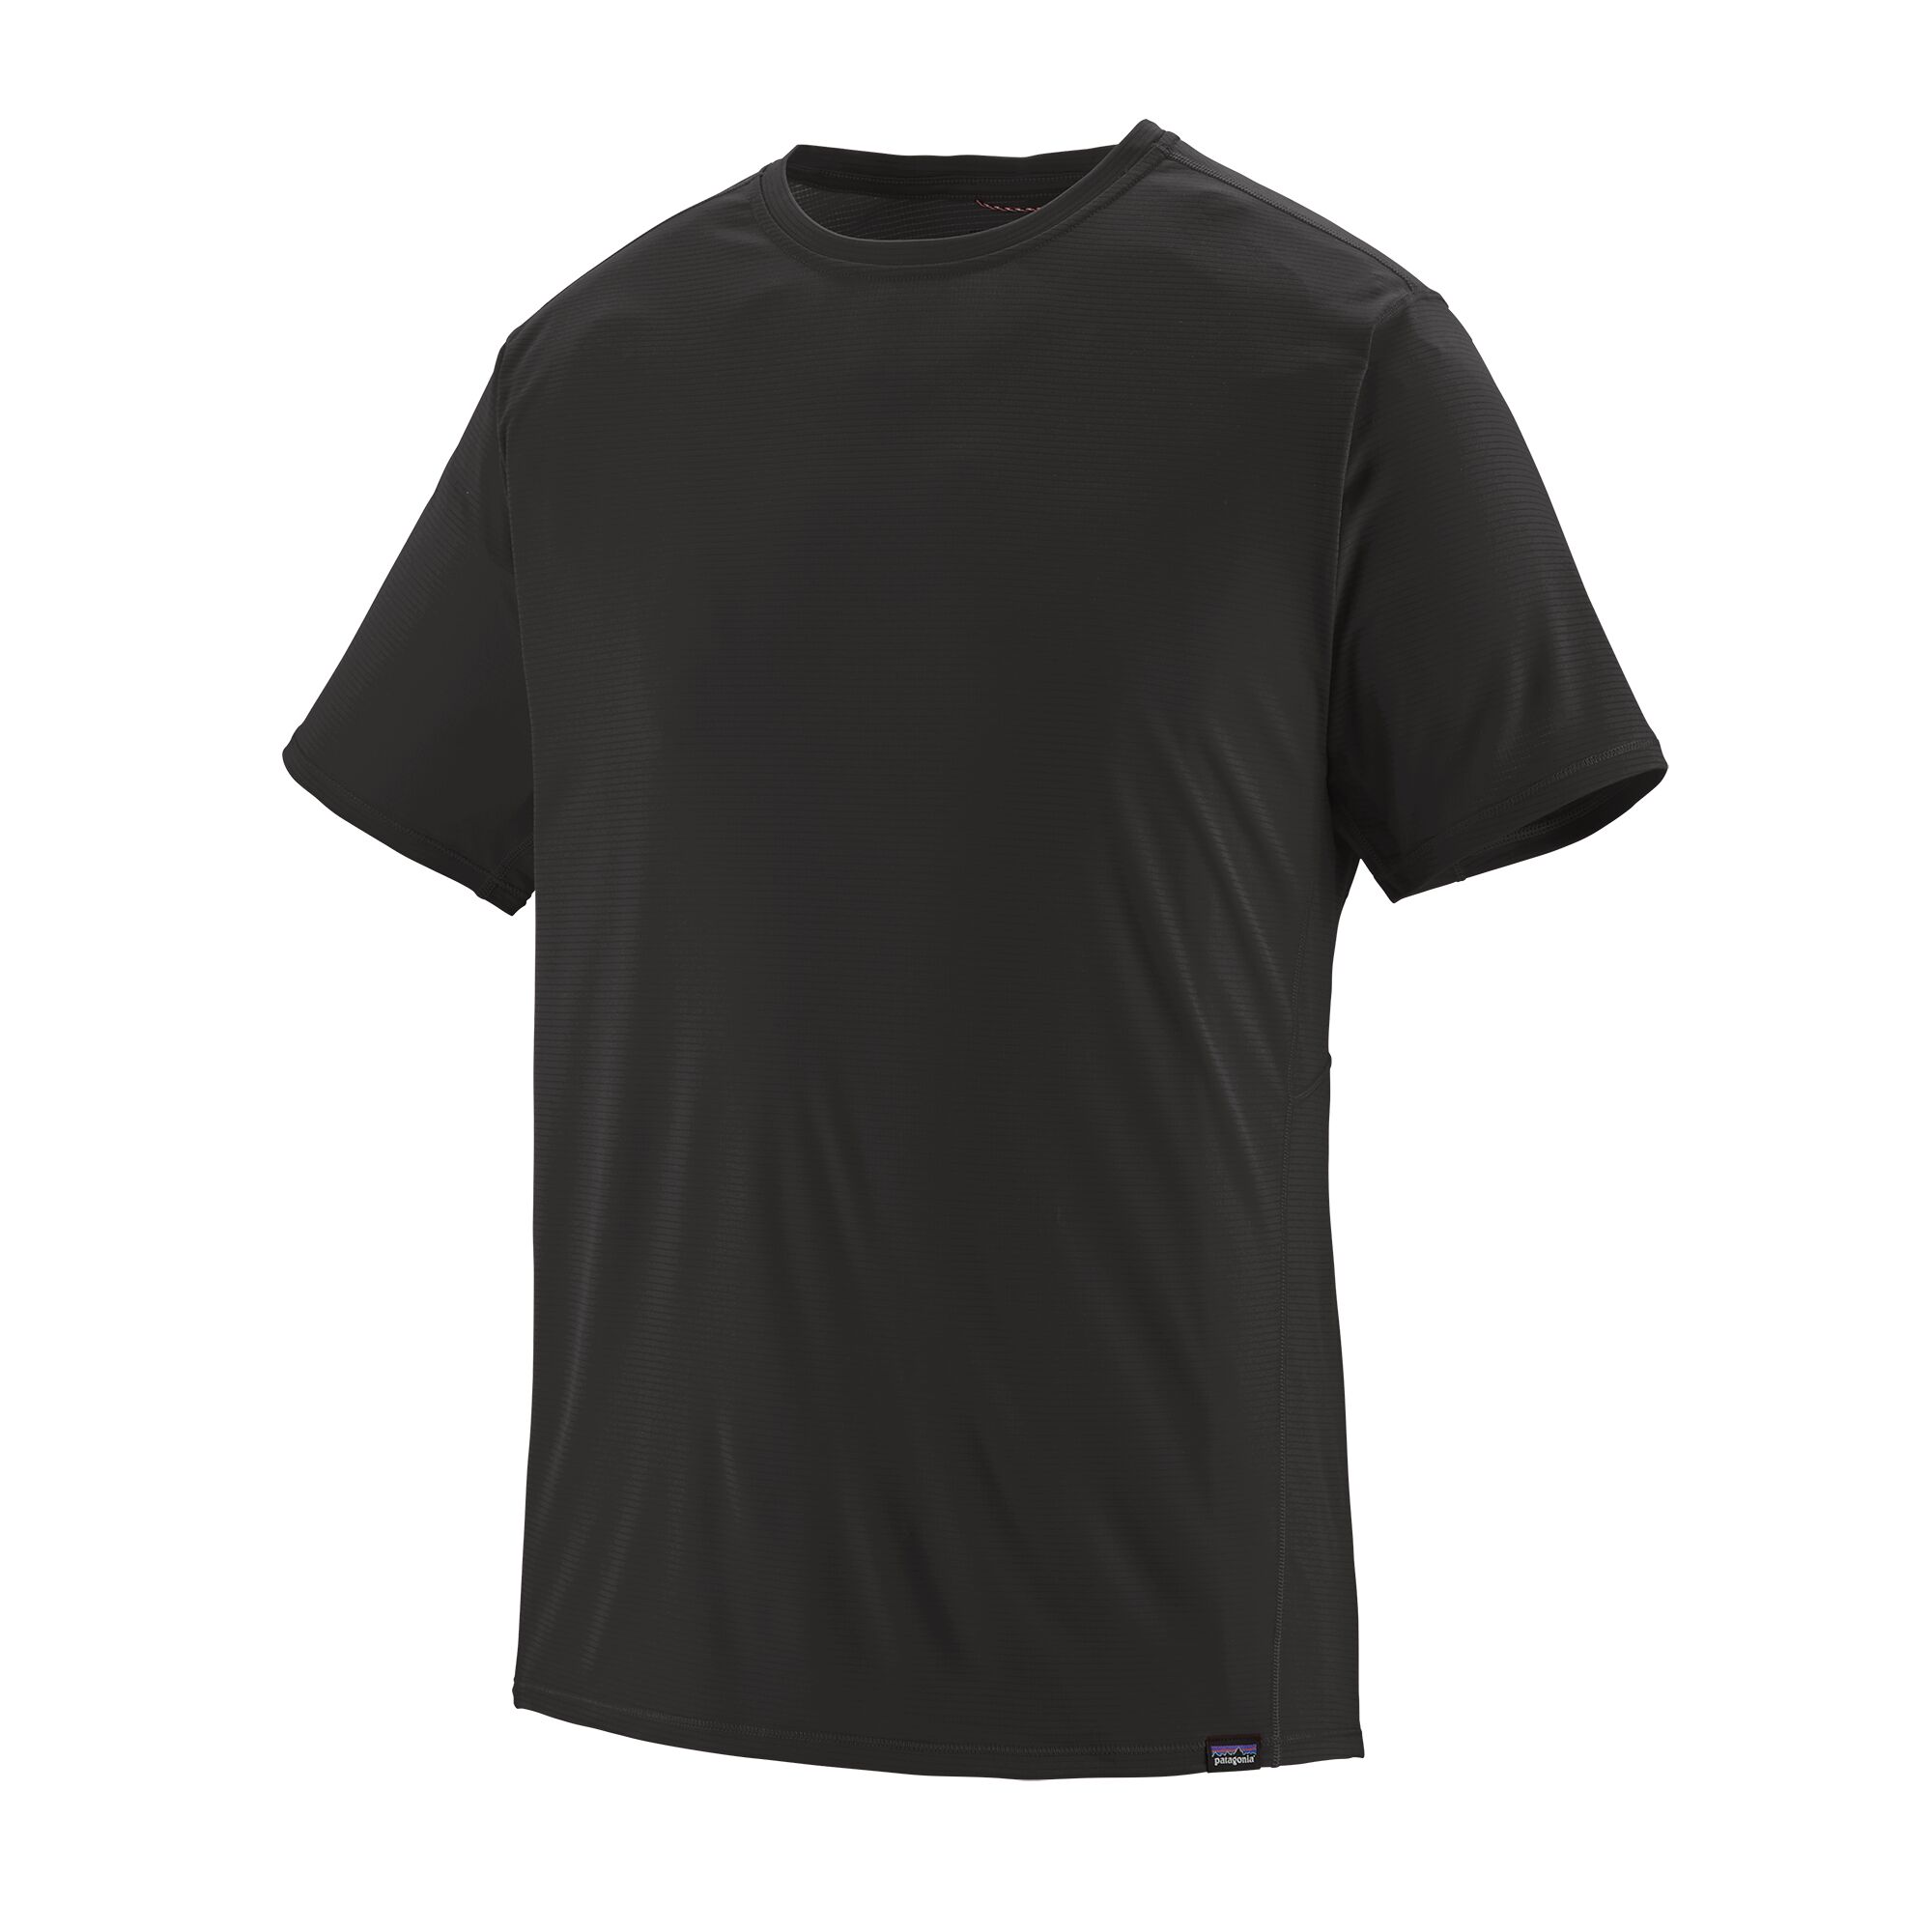 Patagonia 45760 - Men's Capilene Cool Lightweight T-Shirt